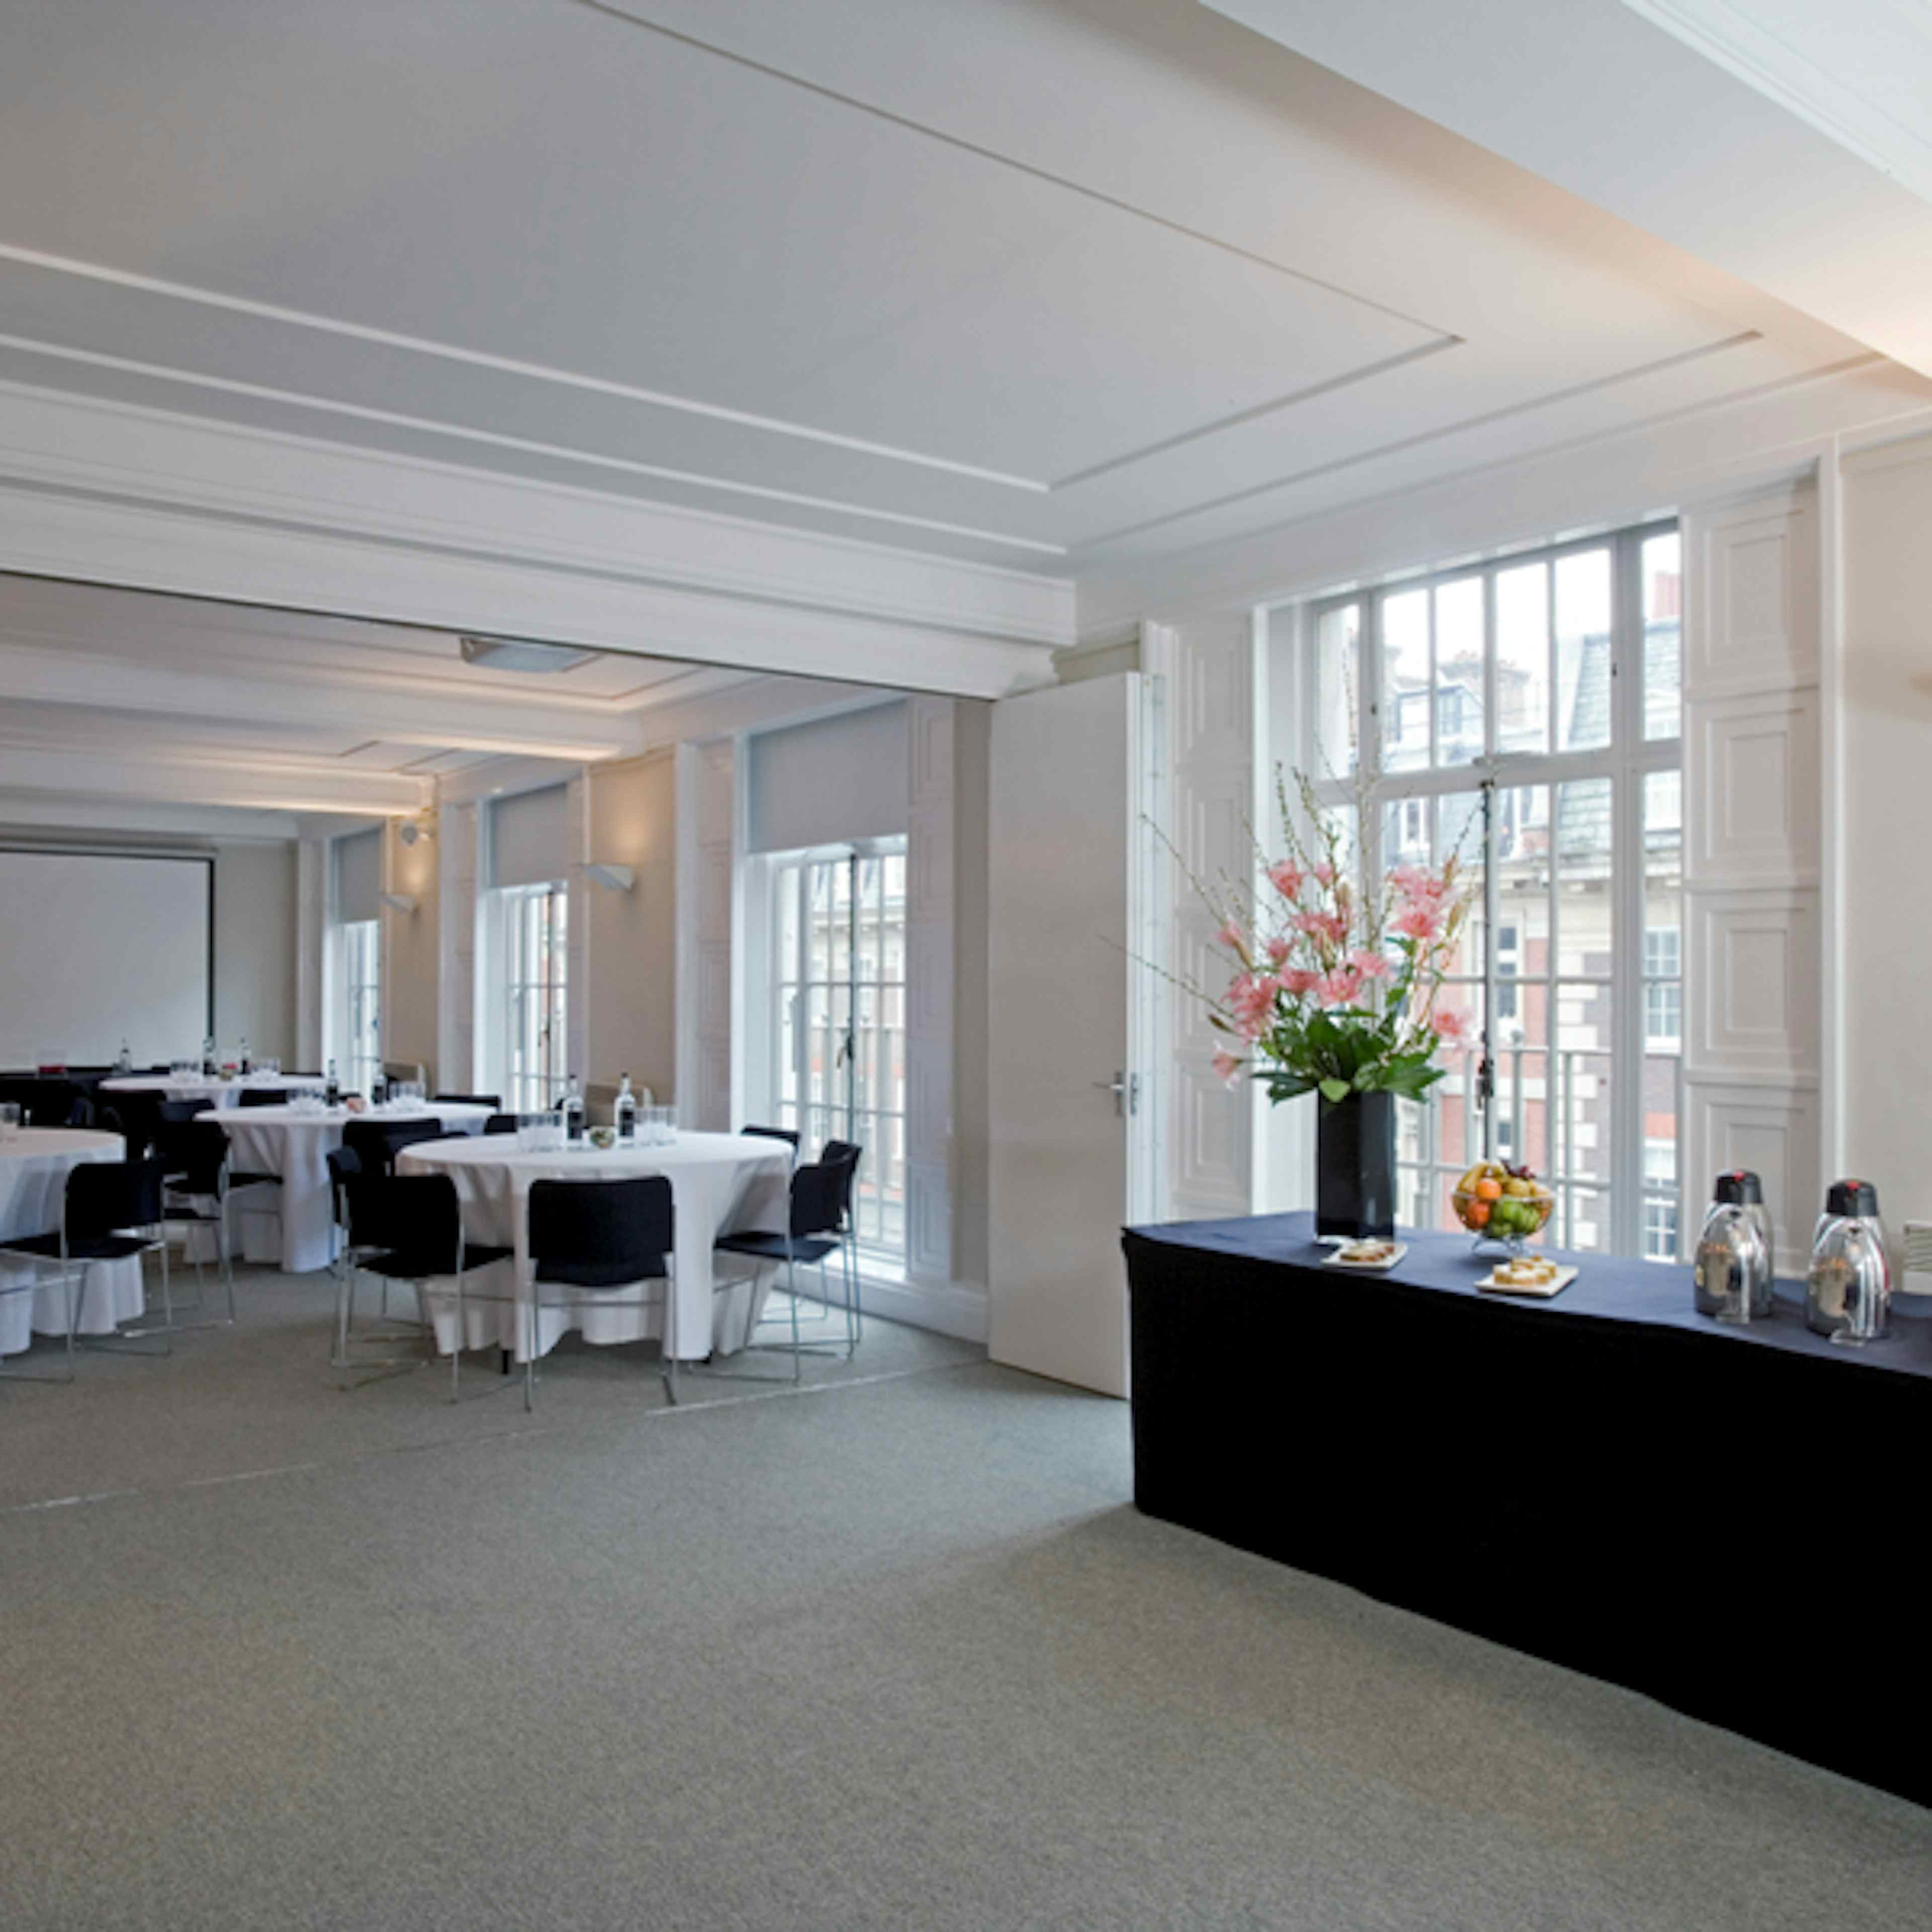 The Royal Institute of British Architects (RIBA) - Lutyens Room image 2